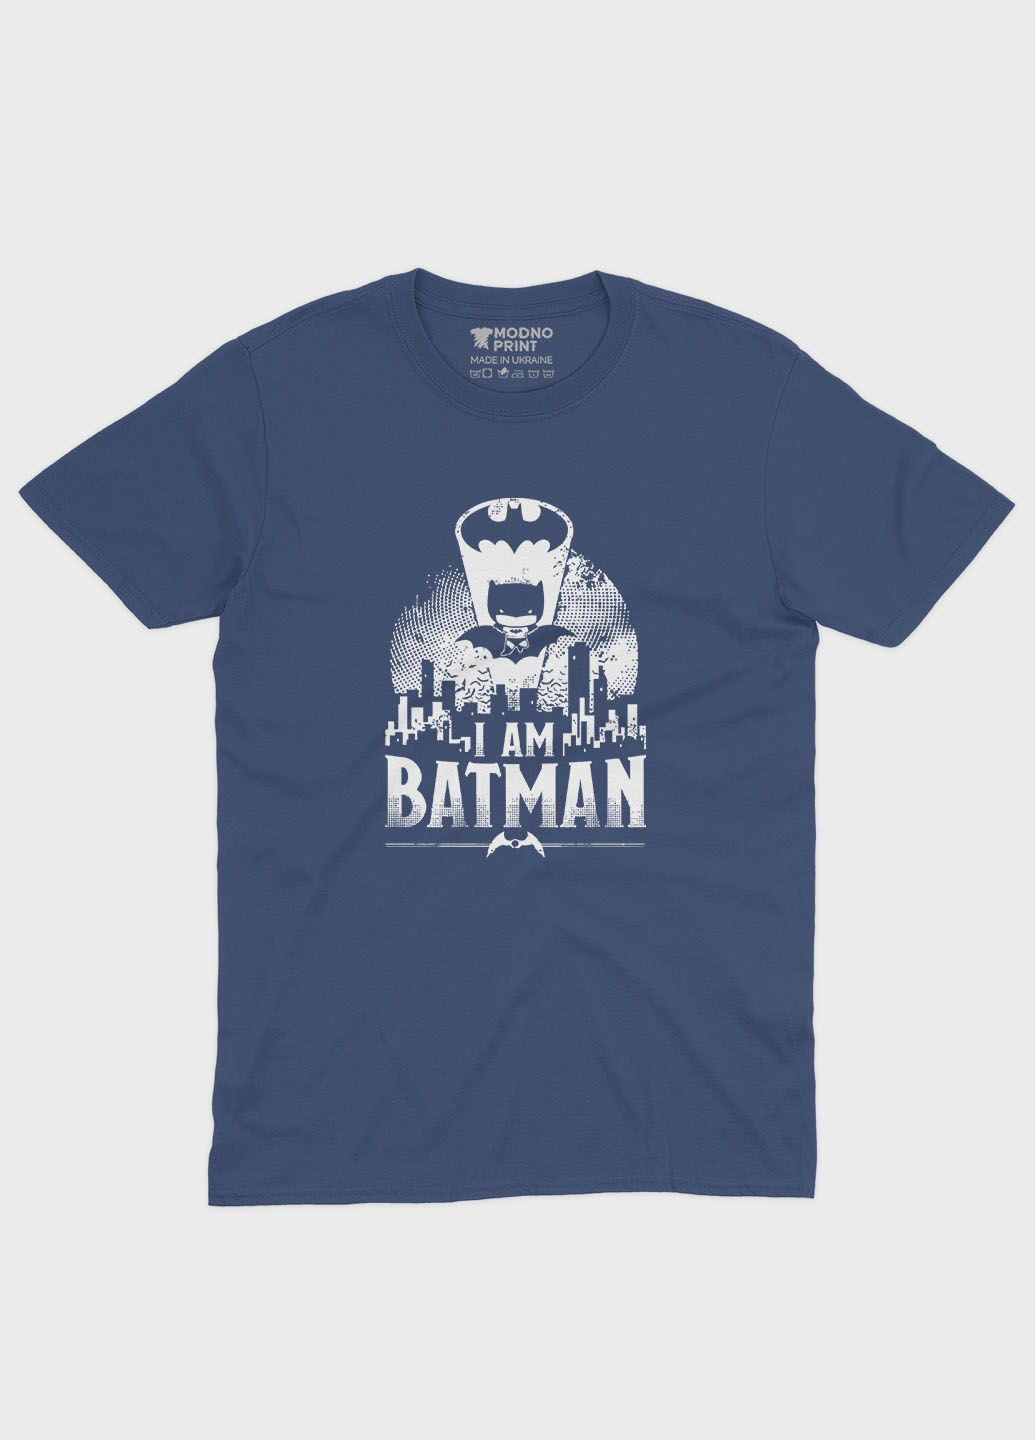 Темно-синяя мужская футболка с принтом супергероя - бэтмен (ts001-1-nav-006-003-039) Modno